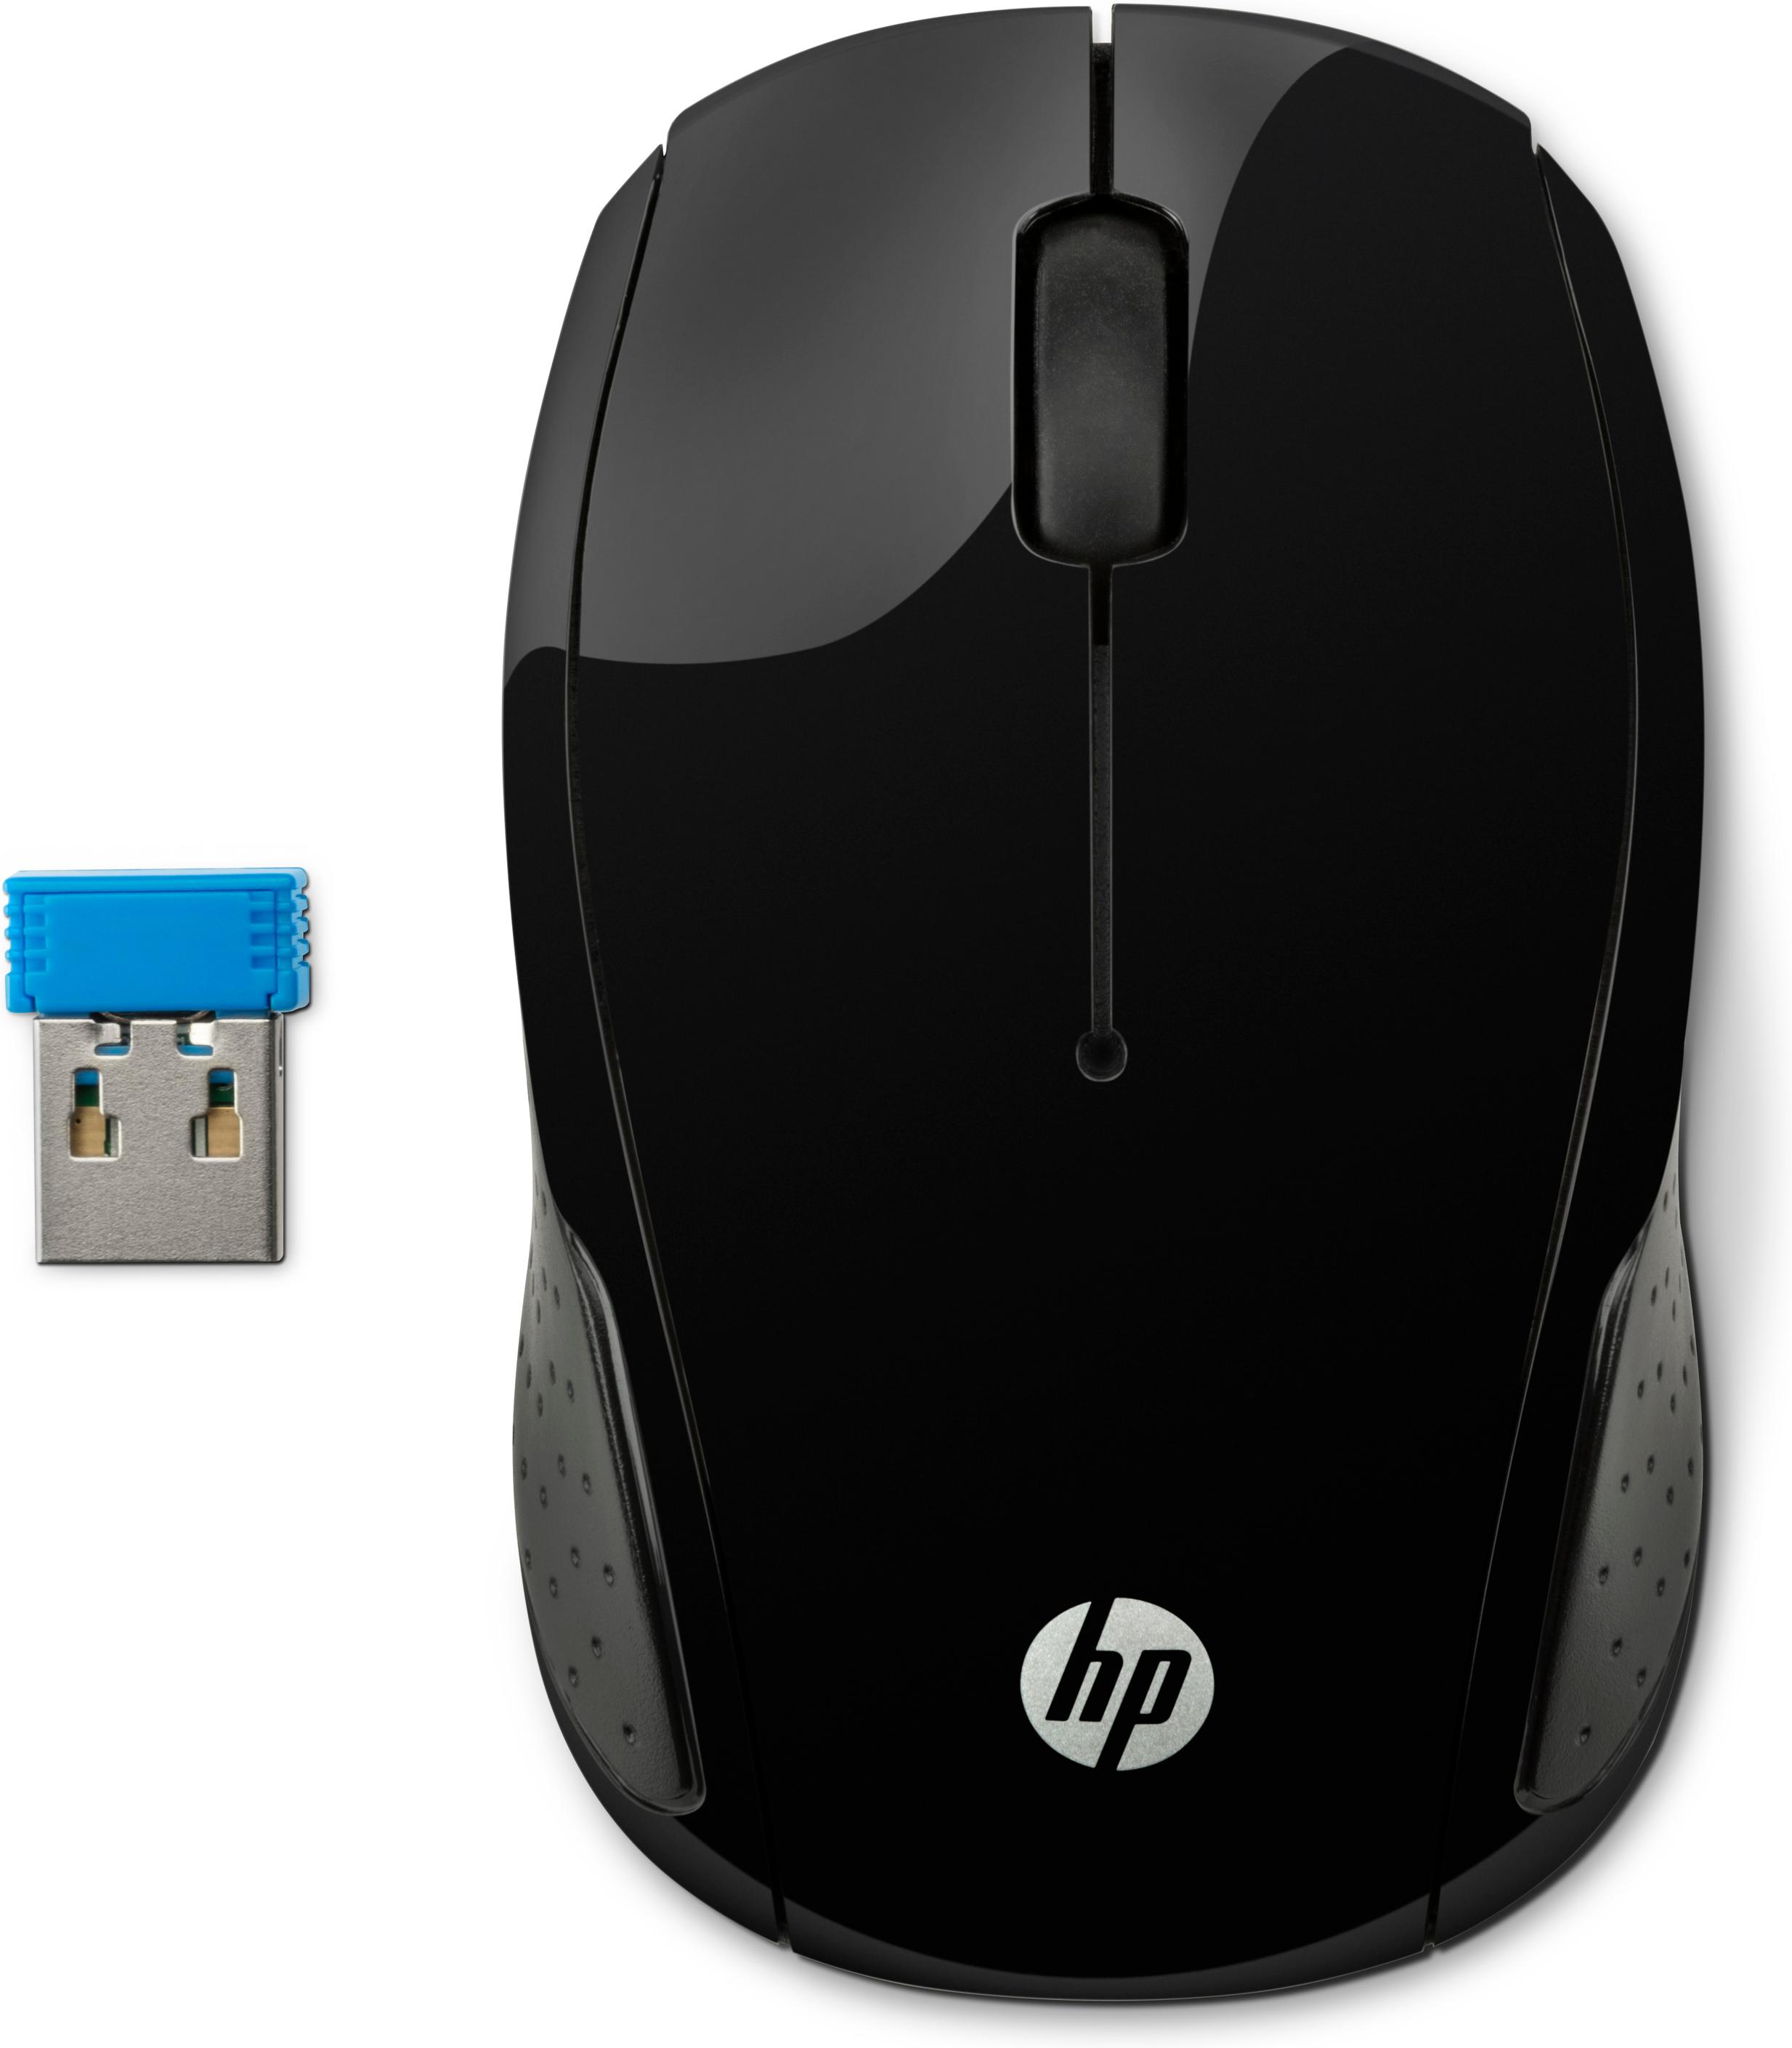 Offerta per HP - Mouse wireless 200 a 12,95€ in Euronics